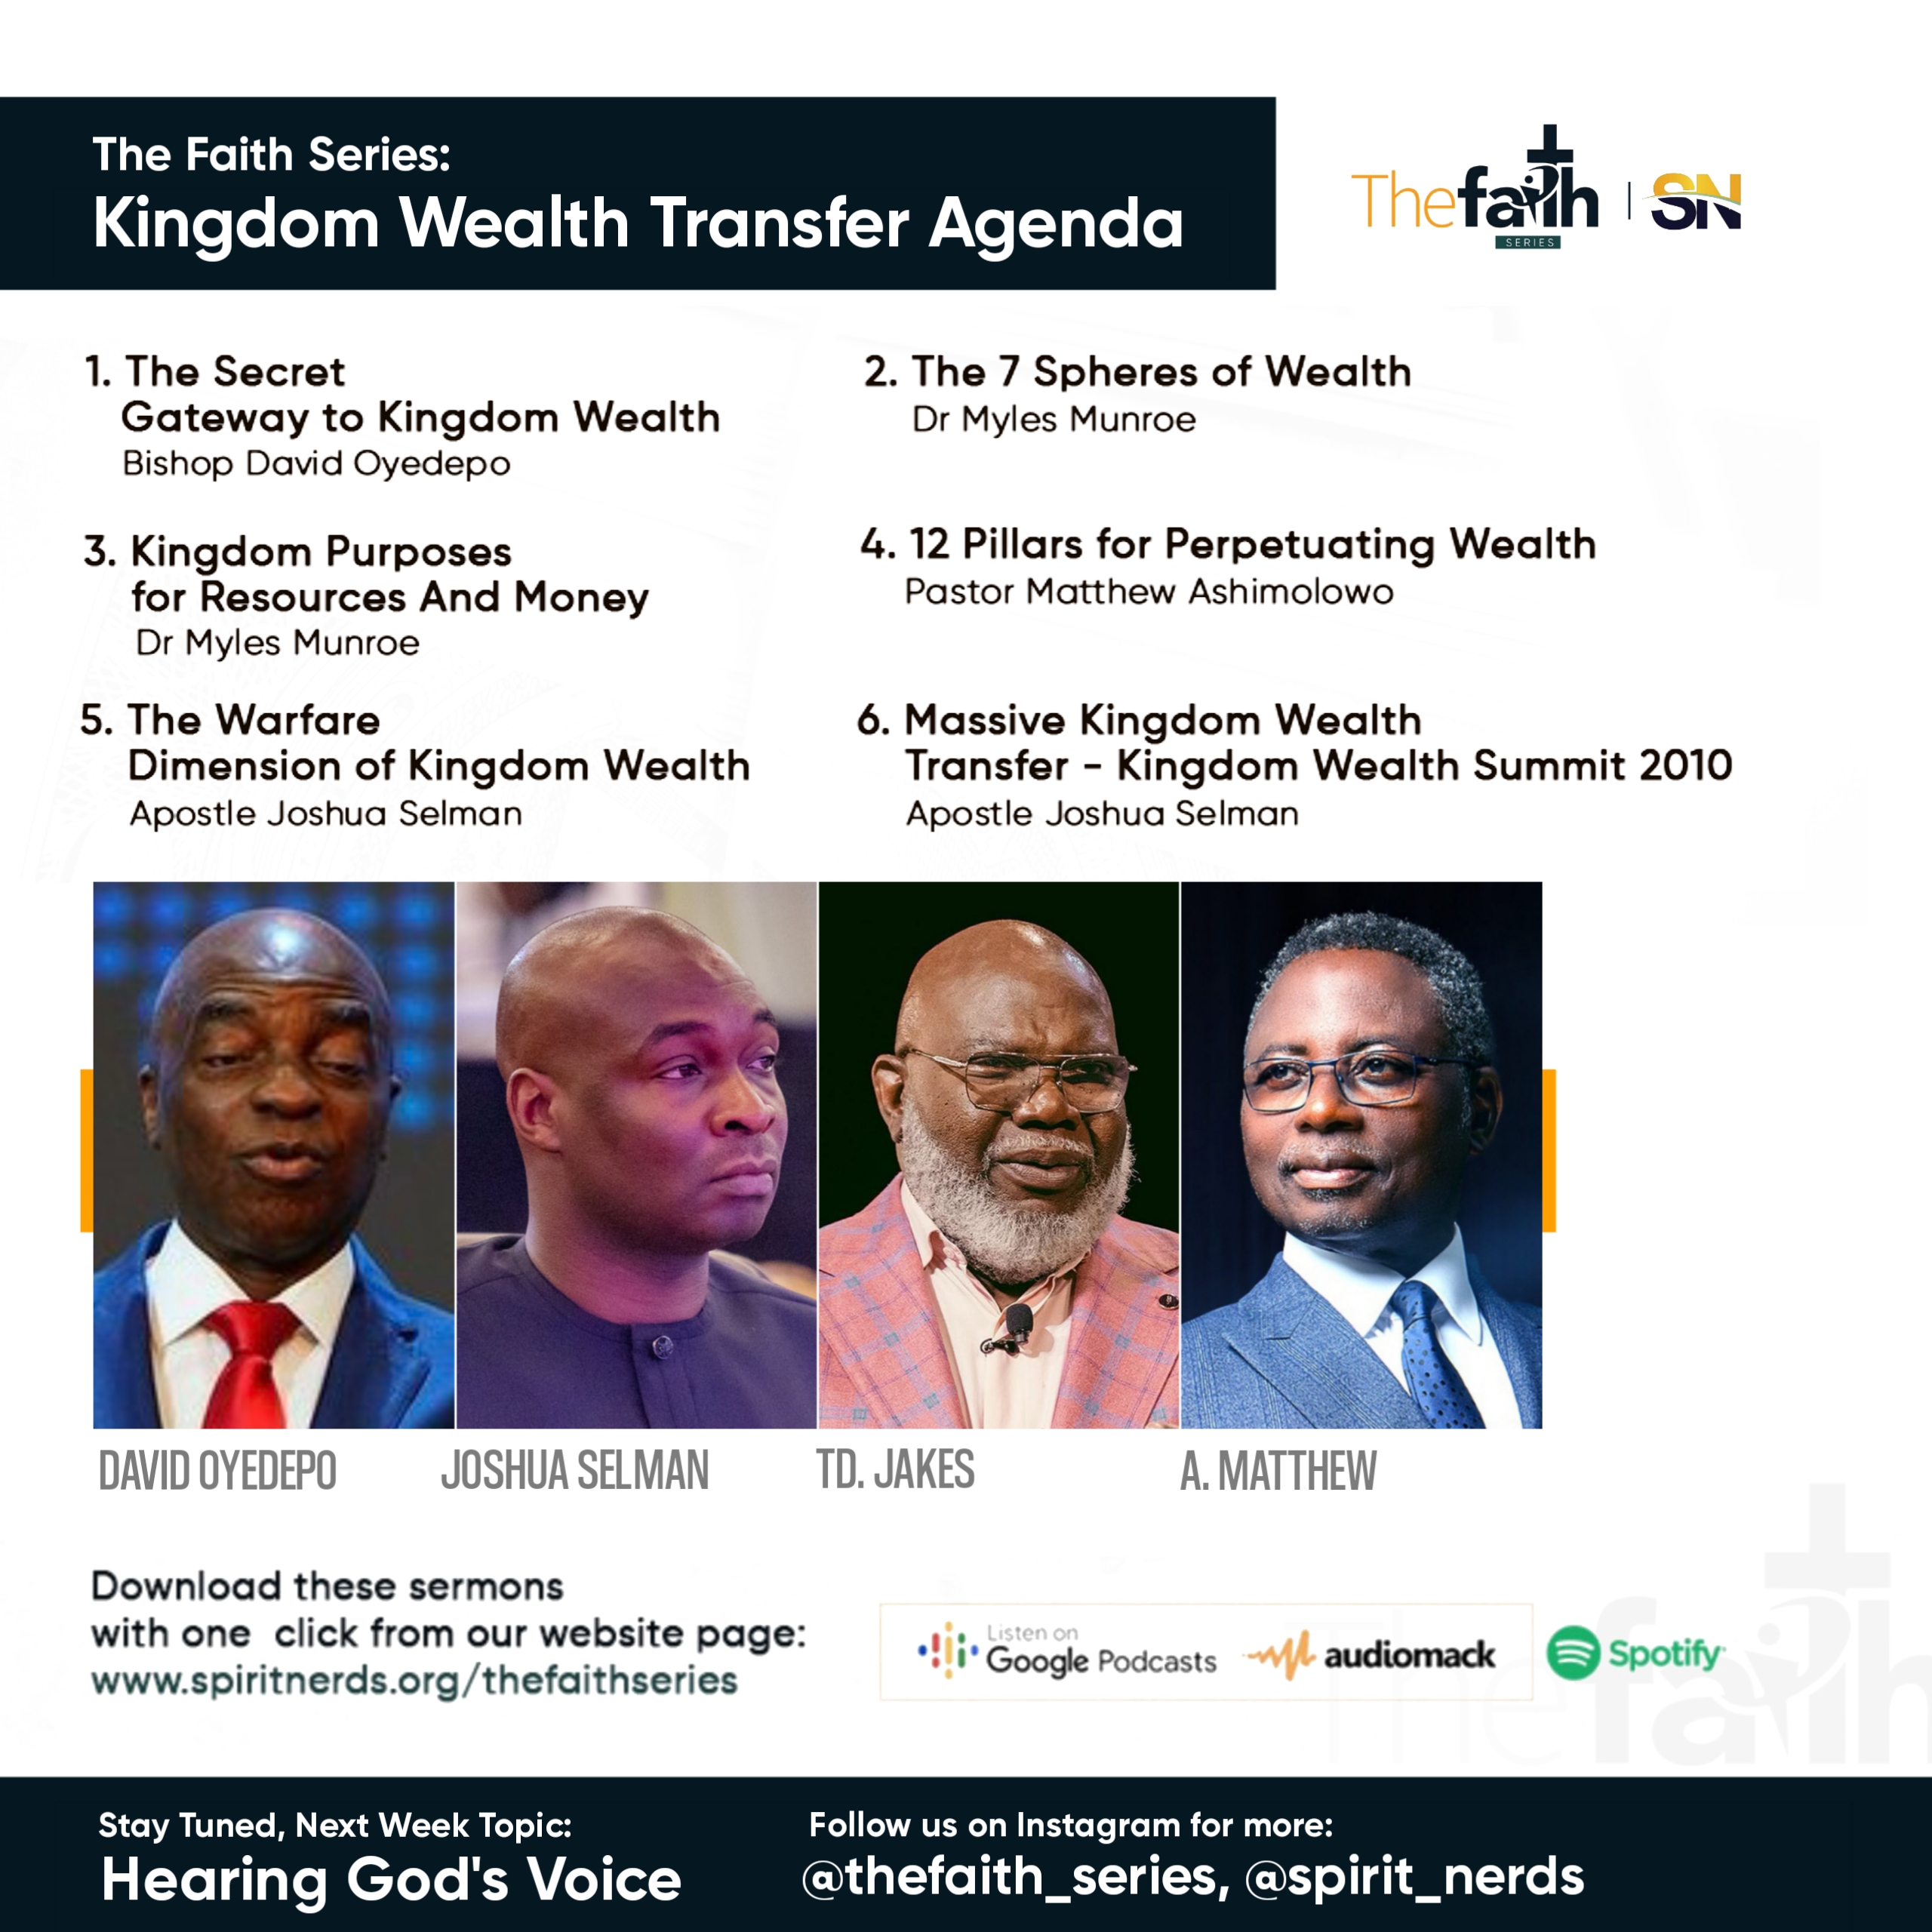 THE FAITH SERIES – Kingdom Wealth Transfer Agenda